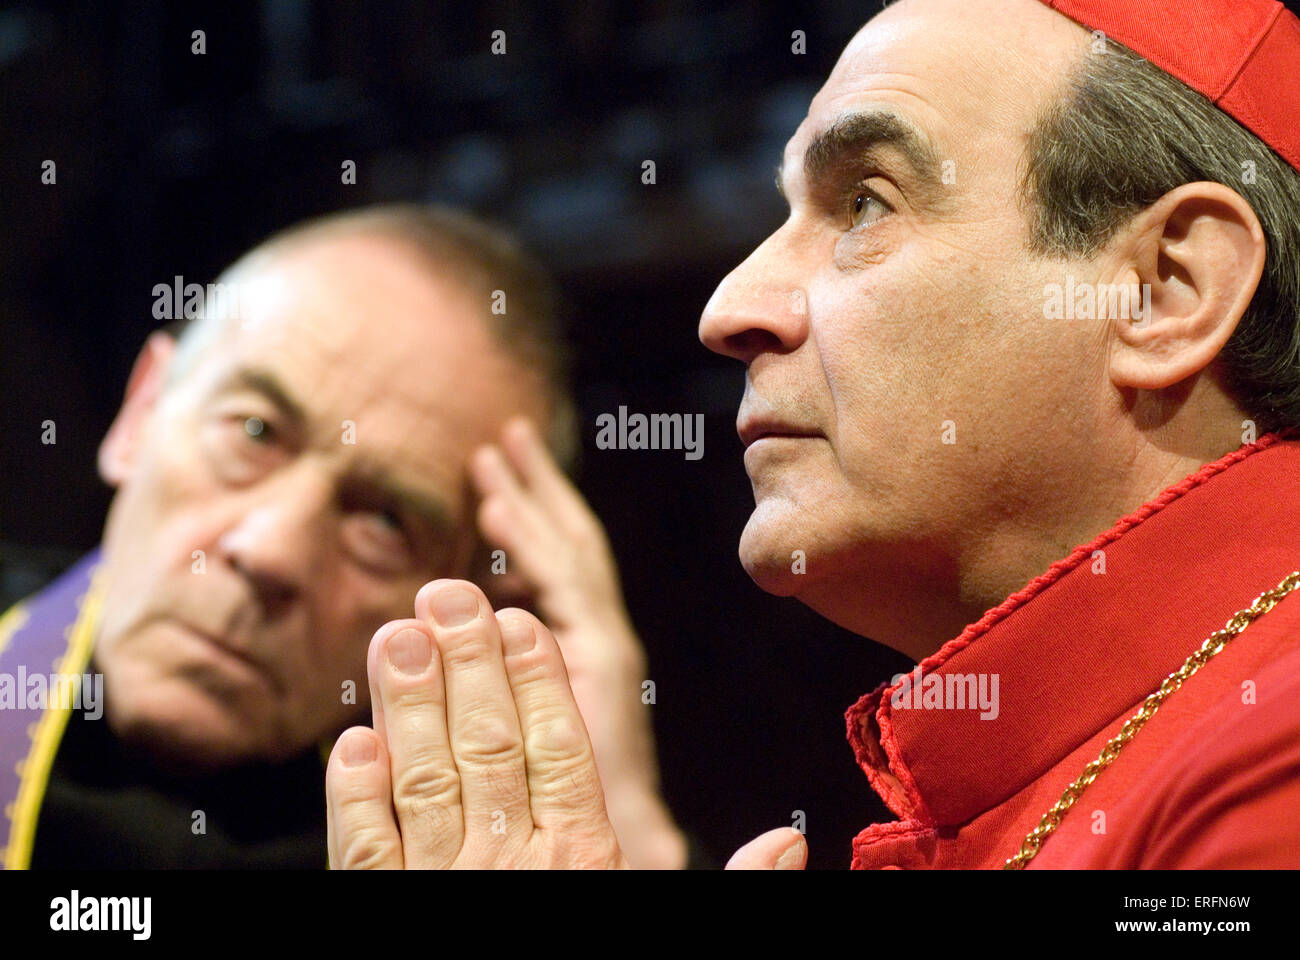 Roger Crane 's play ' The Last Confession' - David Suchet as Cardinal Benelli and Bernard Lloyd as Cardinal Villiot in a Stock Photo